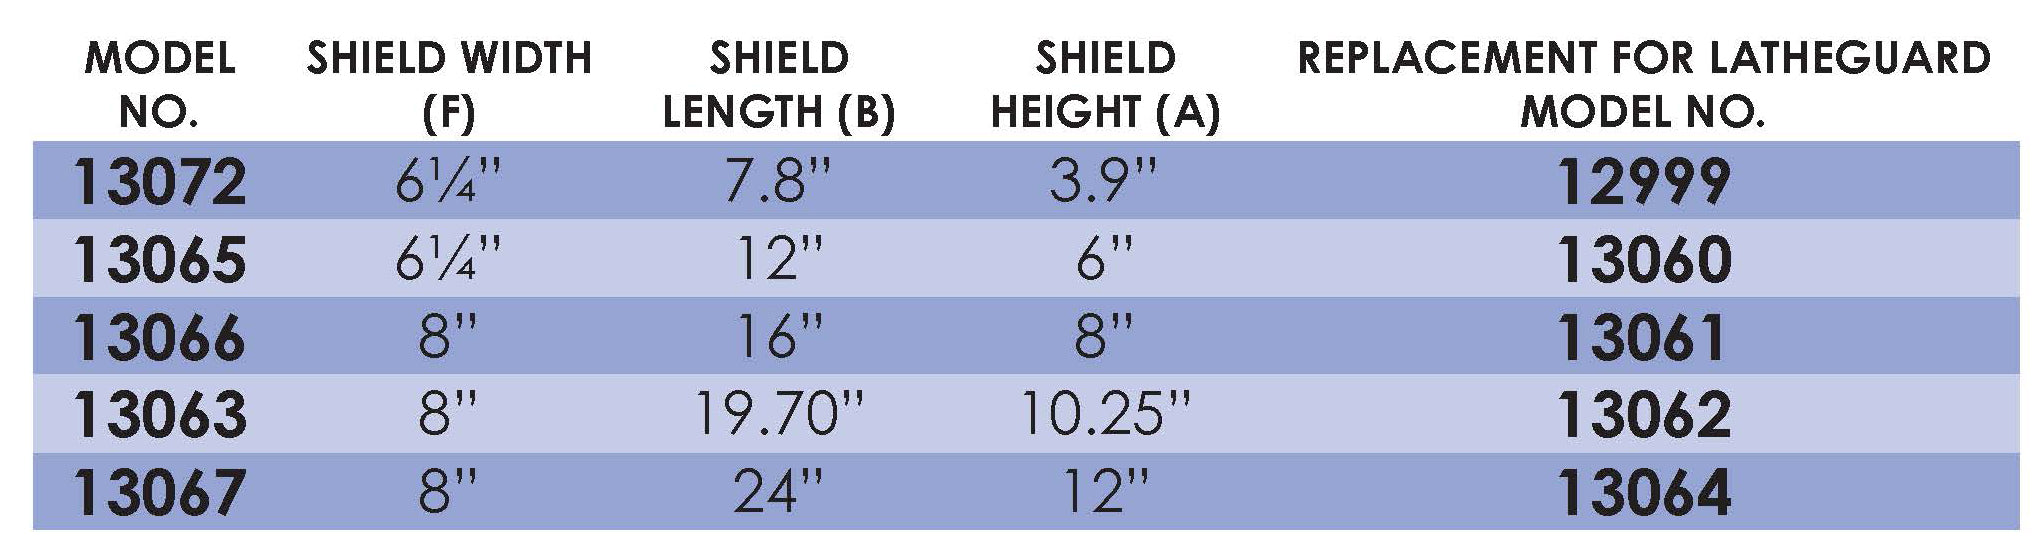 Replacement Shield - Medium/Large